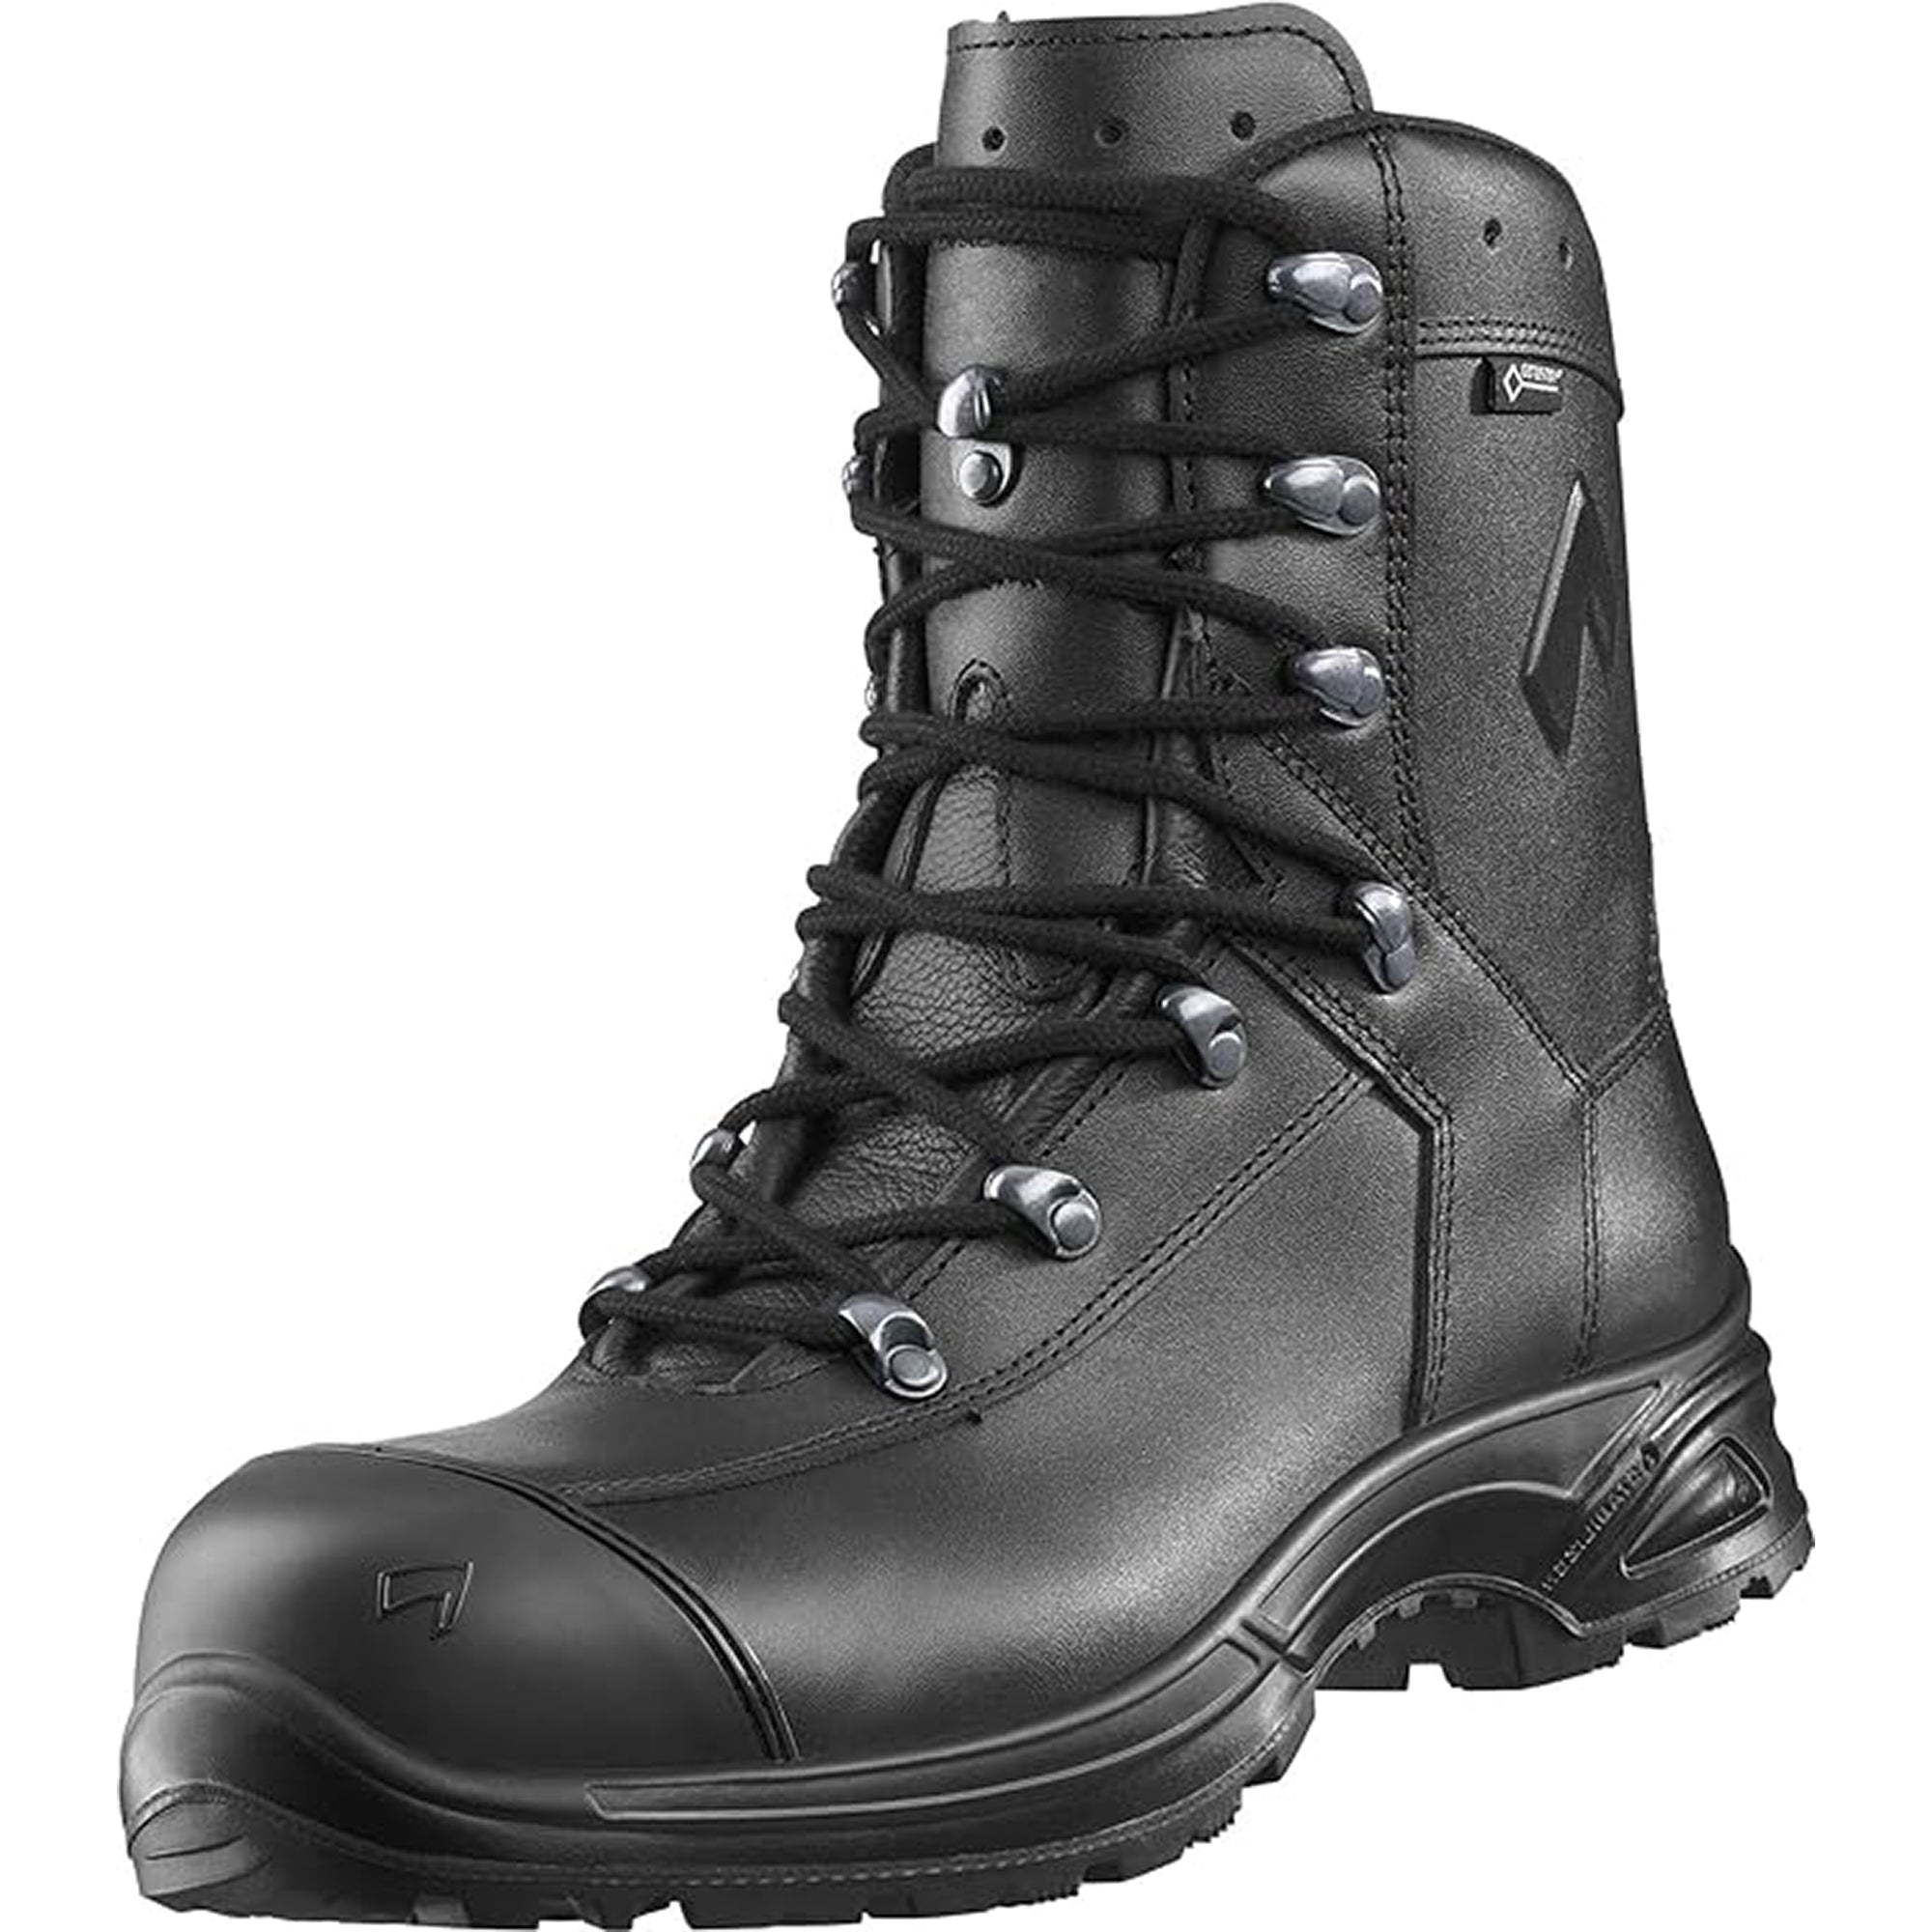 HAIX Airpower XR22 Safety  MID  Boots Shoes Work  Toe Cap  S3 HRO HI CI WR SRC